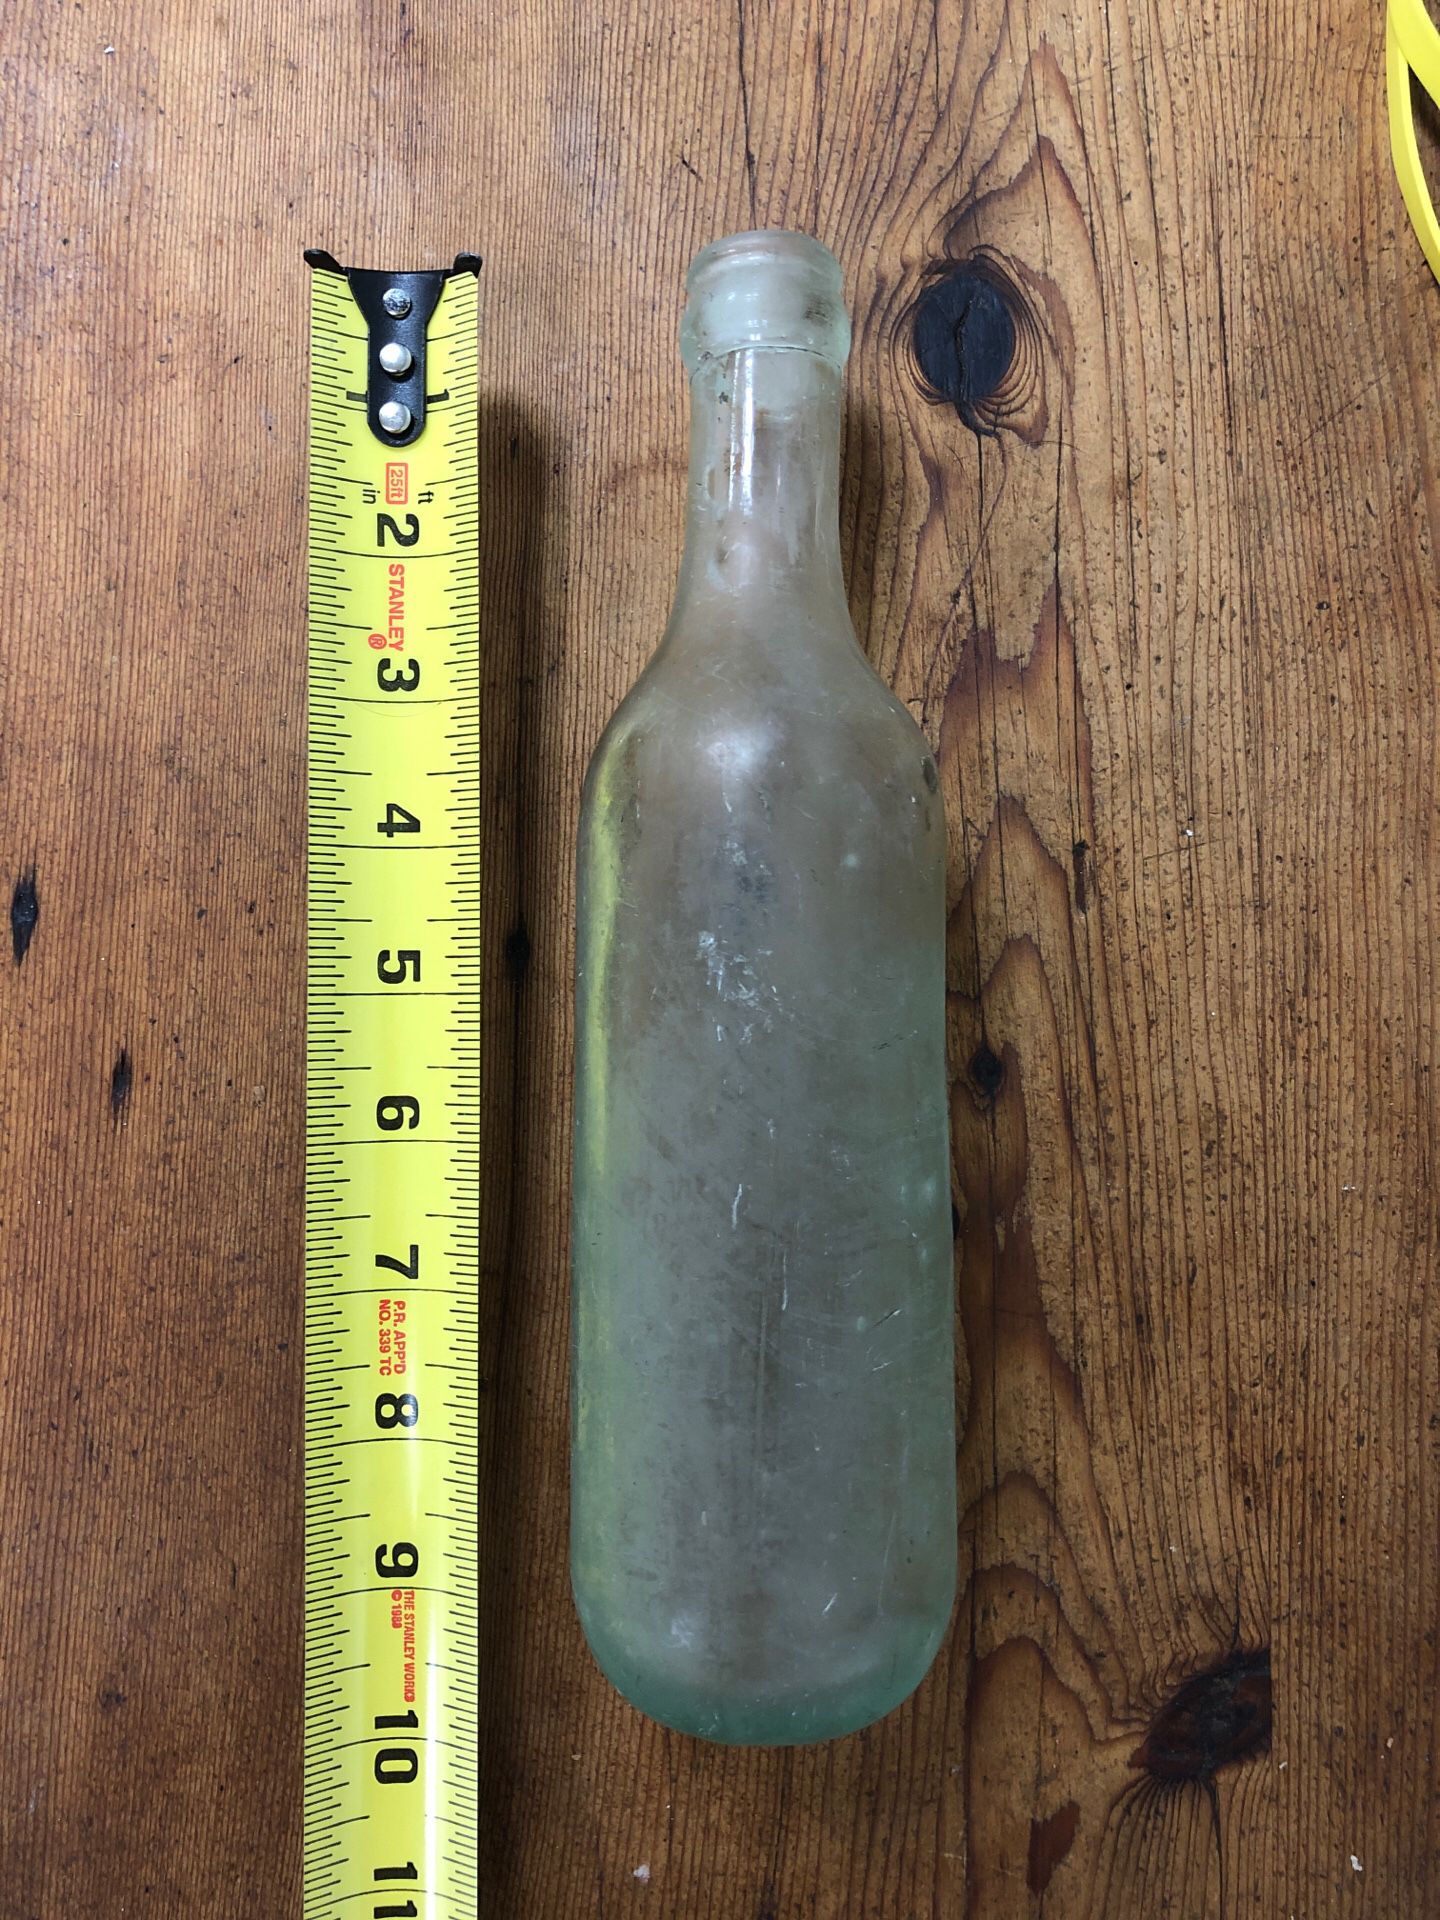 Antique soda bottle